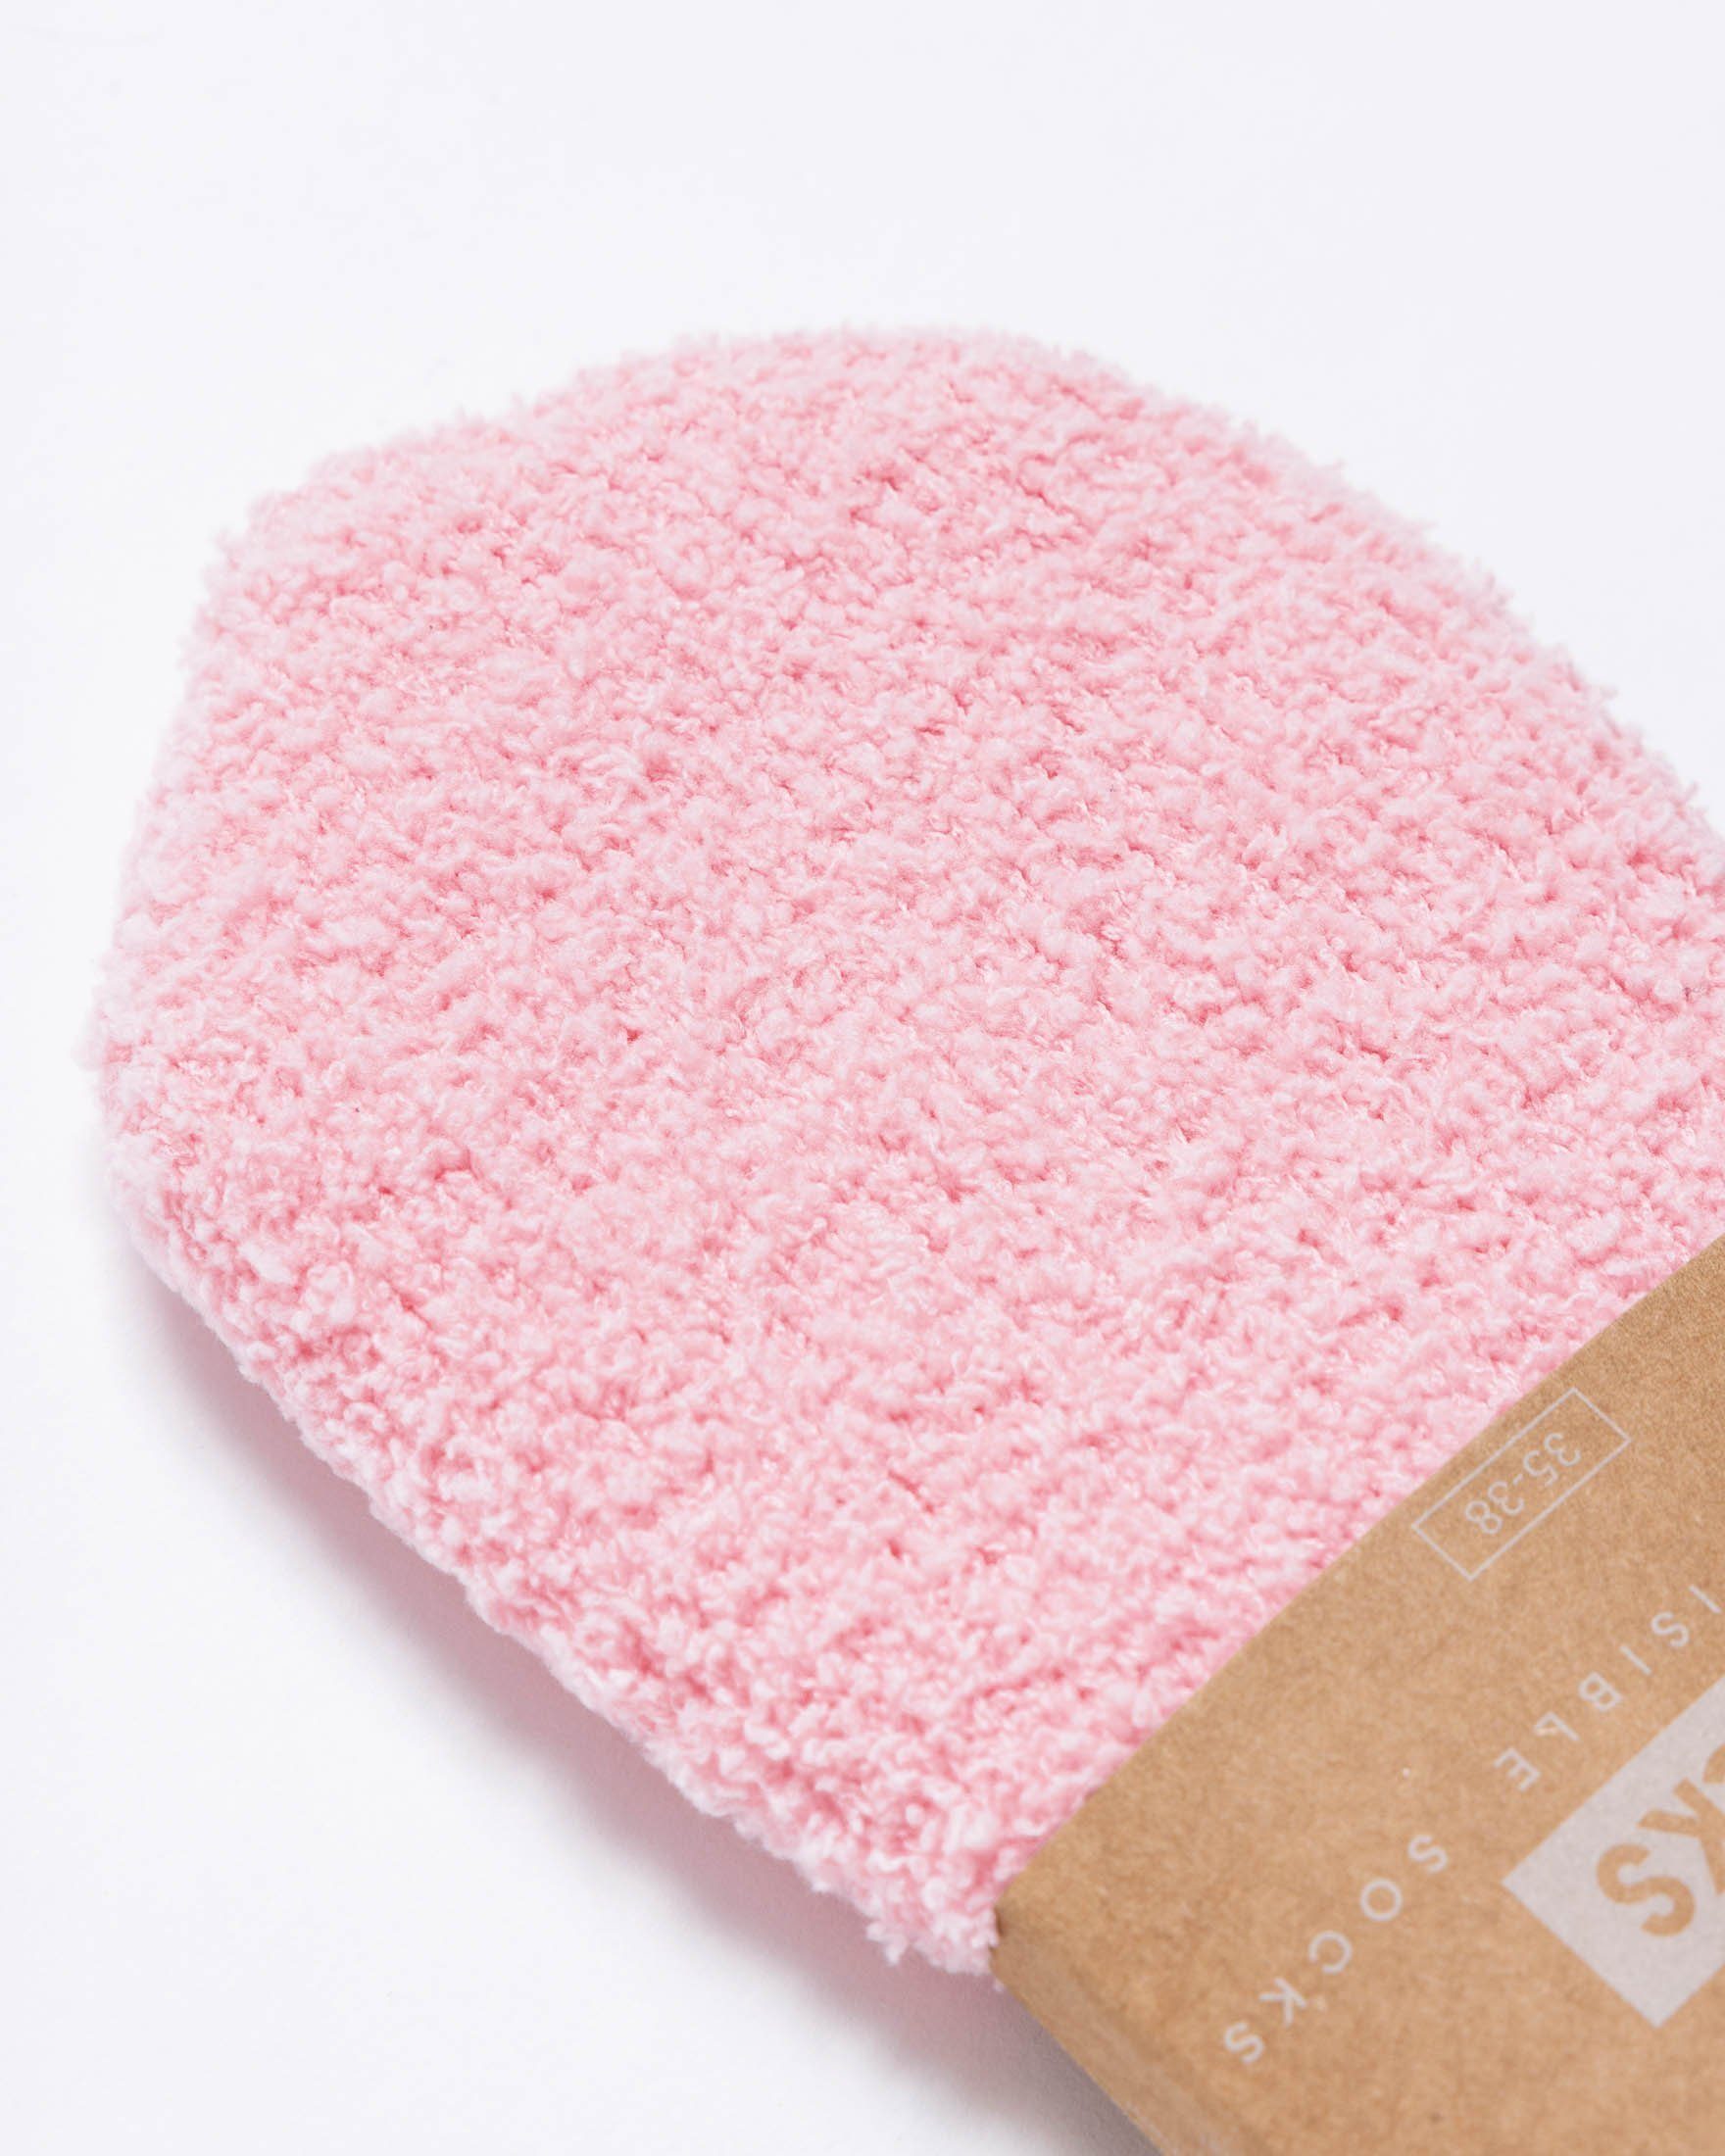 SNOCKS Füßlinge Sneaker Anti-Rutsch-Socken, Socks Mix Herren Invisible Fluffy Damen (2-Paar) Winter den weich für kuschelig (Pink/Lavendel) Socken